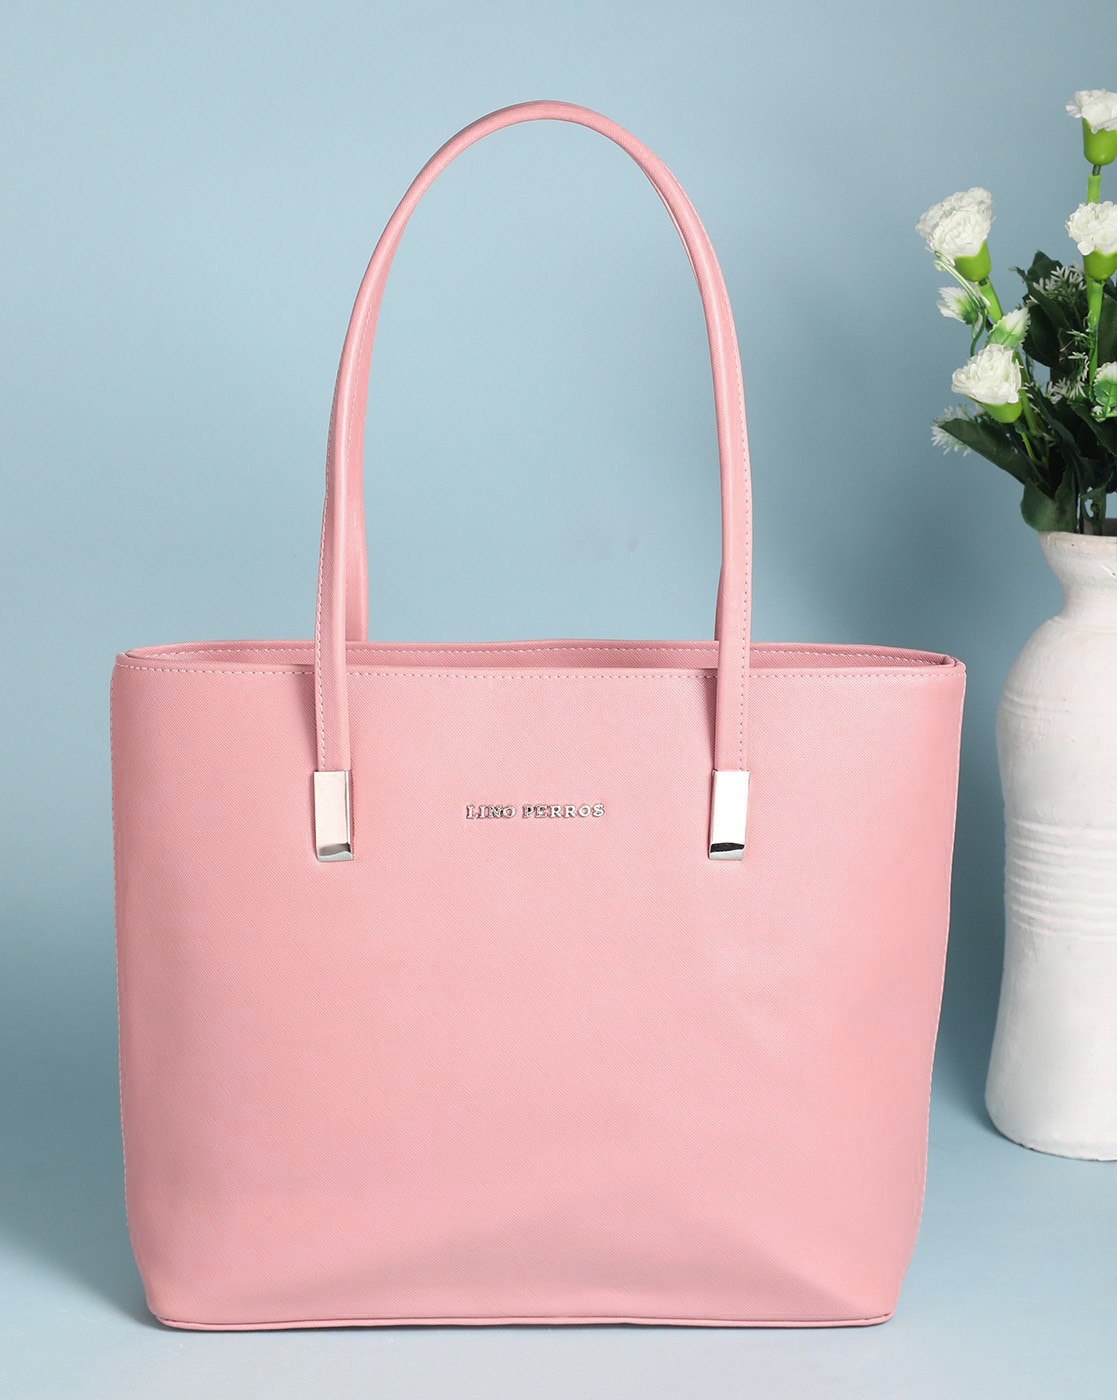 Buy SGM Fashion Women Pink Handbag pink Online @ Best Price in India |  Flipkart.com